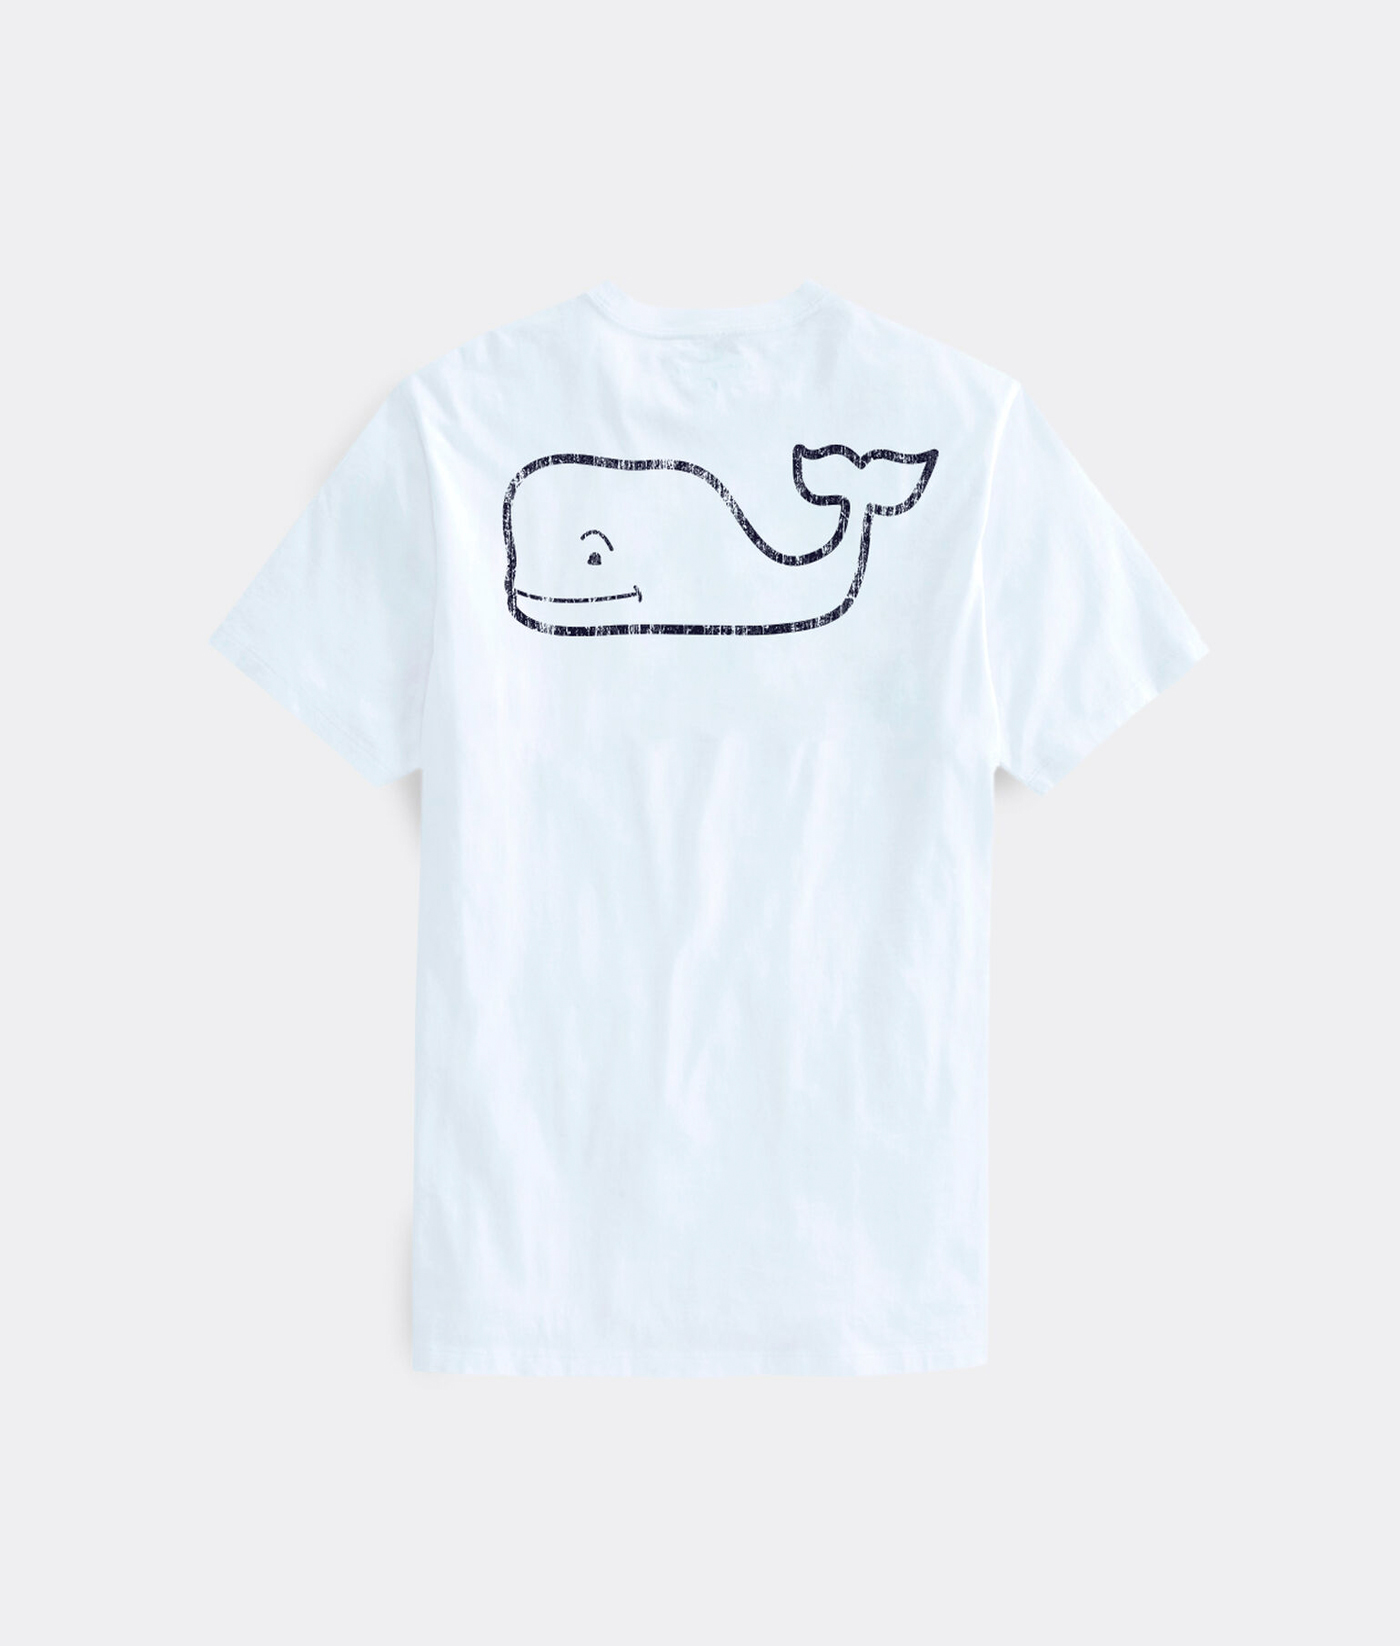 Men's Vineyard Vines Whale Pocket T-Shirt, Size X-Large - White